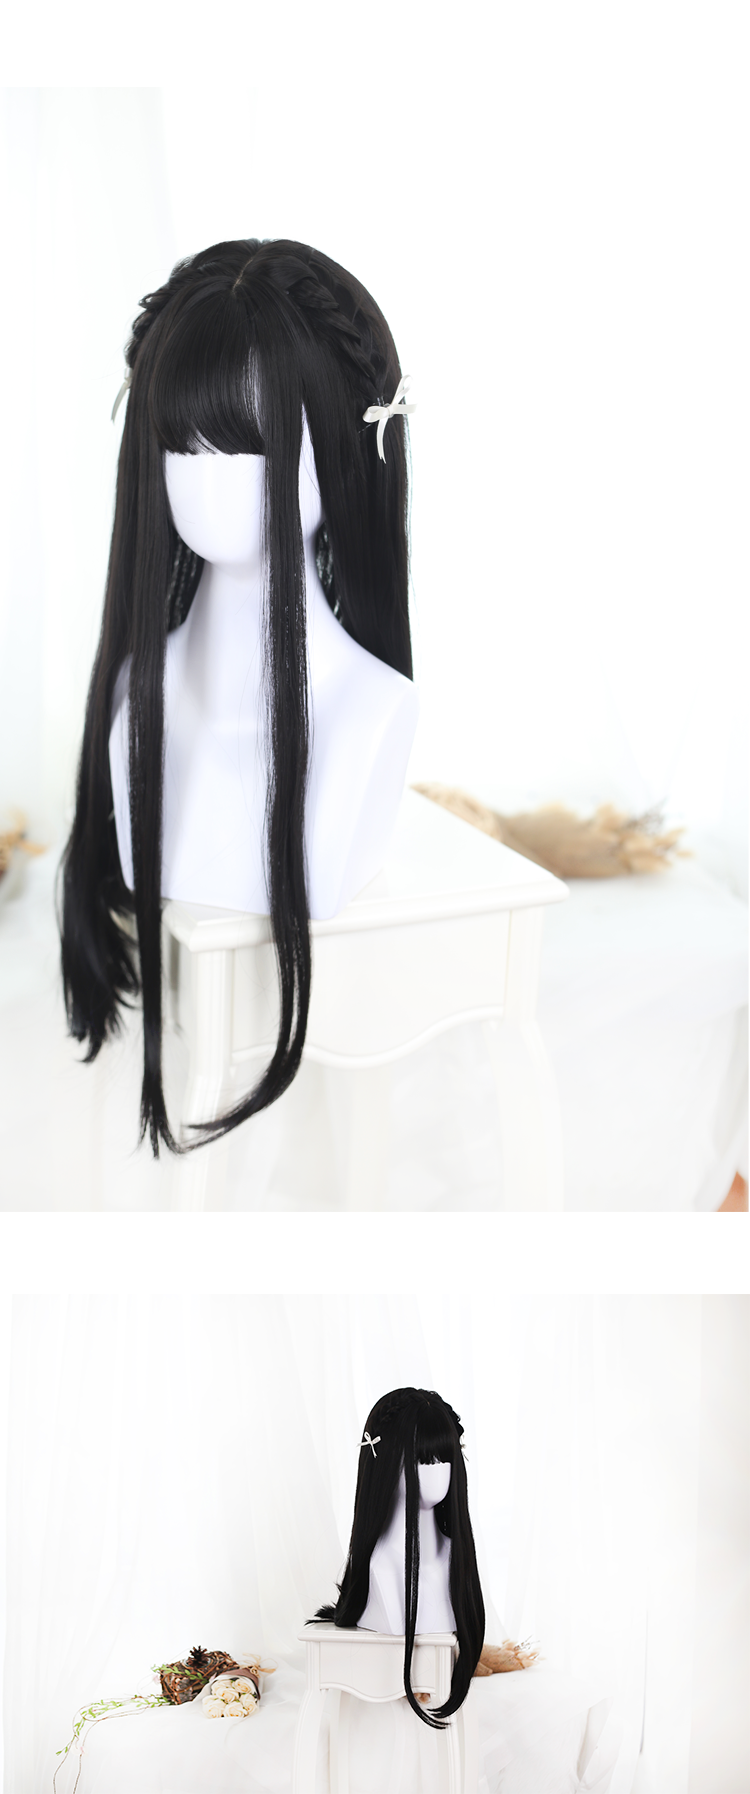 Dalao Home~Lolita JaneNye 65cm Straight Wig Black   